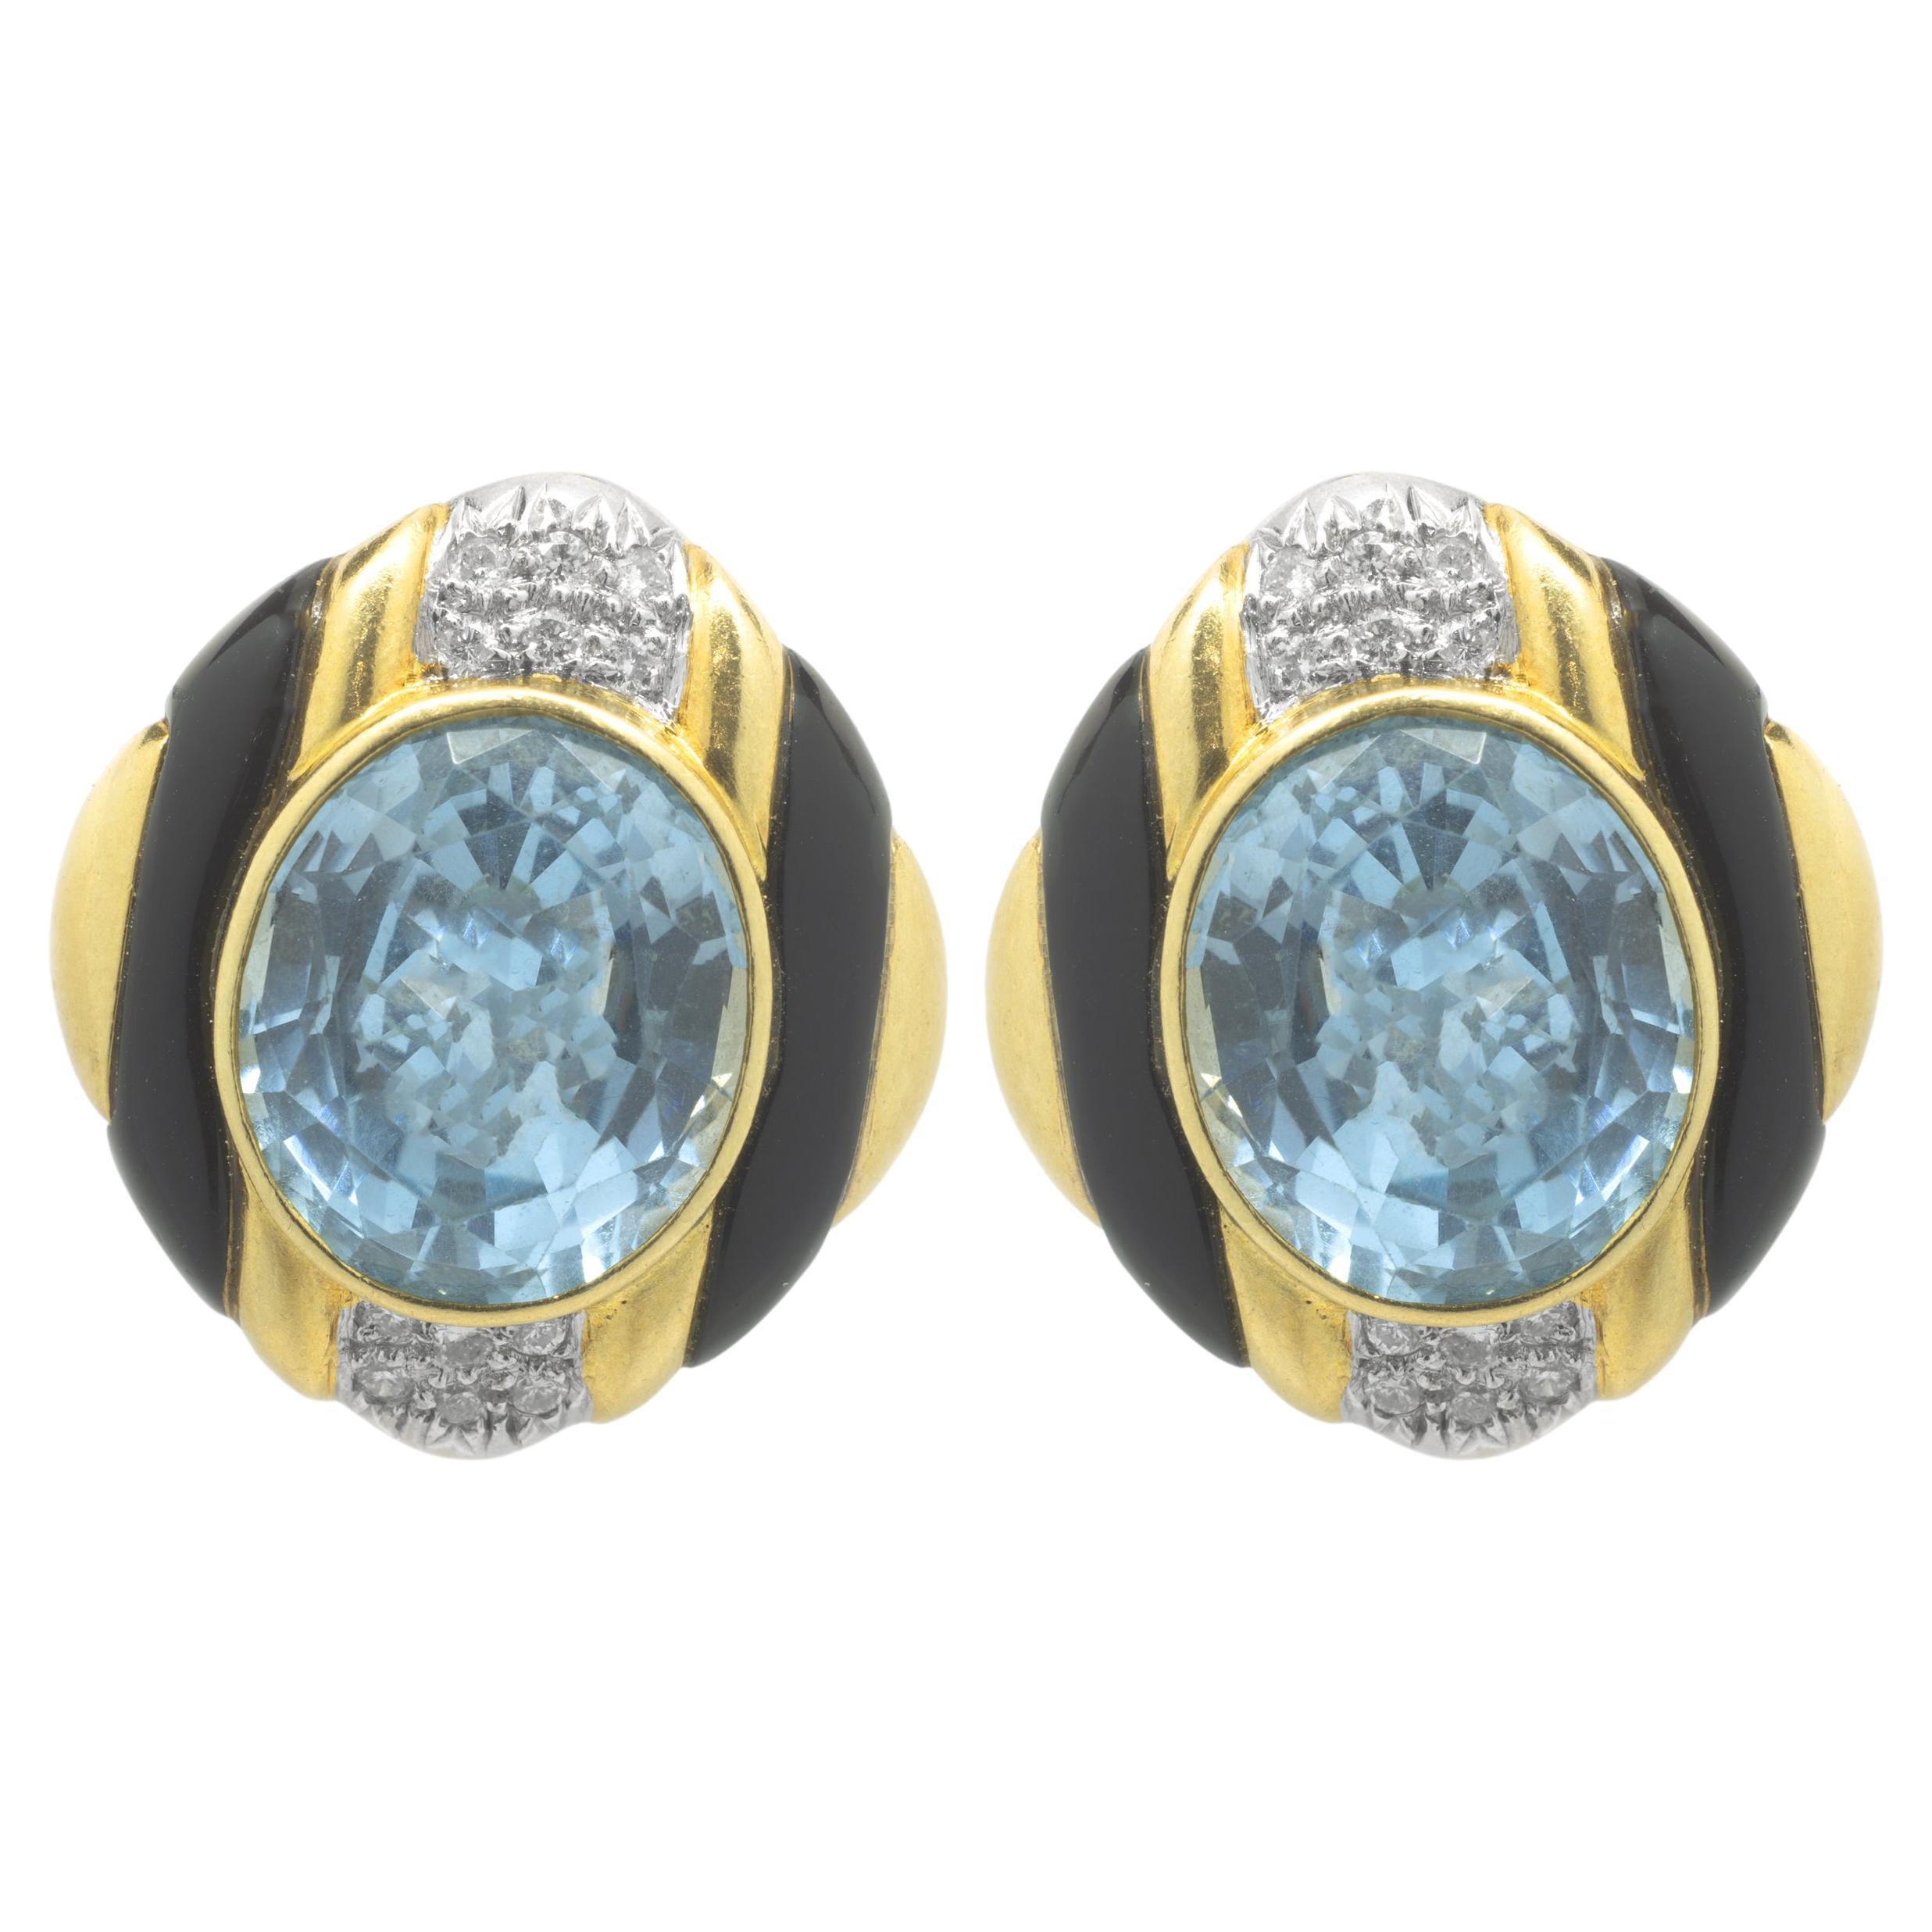 18 Karat Yellow Gold Blue Topaz, Diamond and Black Onyx Earrings